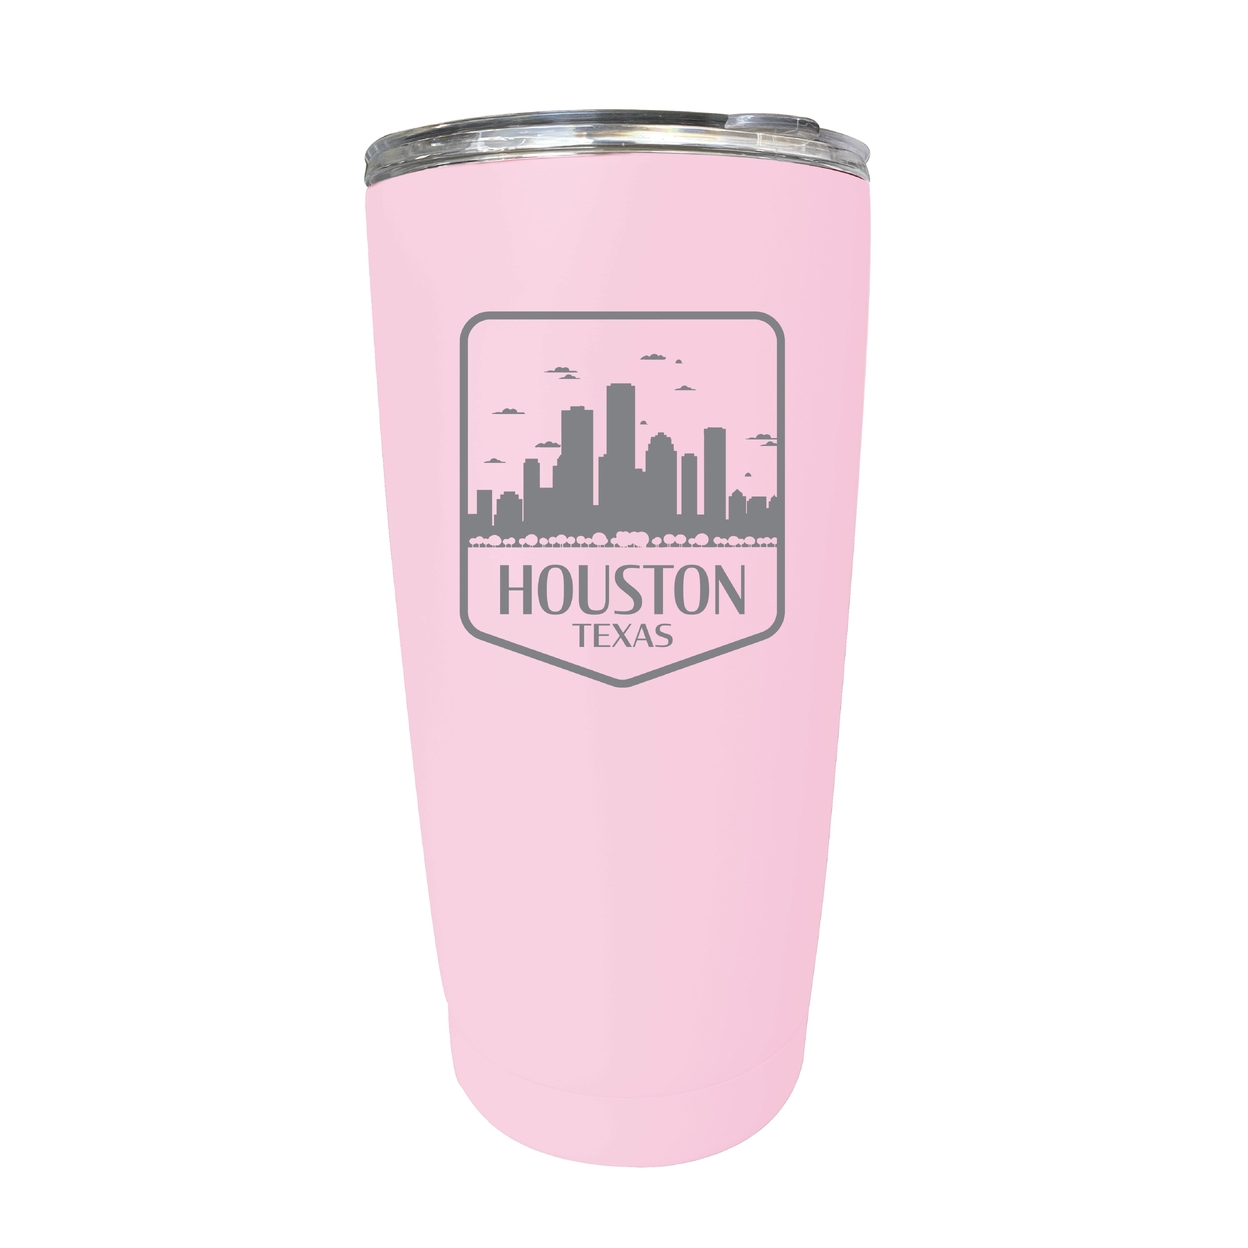 Houston Texas Souvenir 16 Oz Engraved Stainless Steel Insulated Tumbler - Pink,,Single Unit